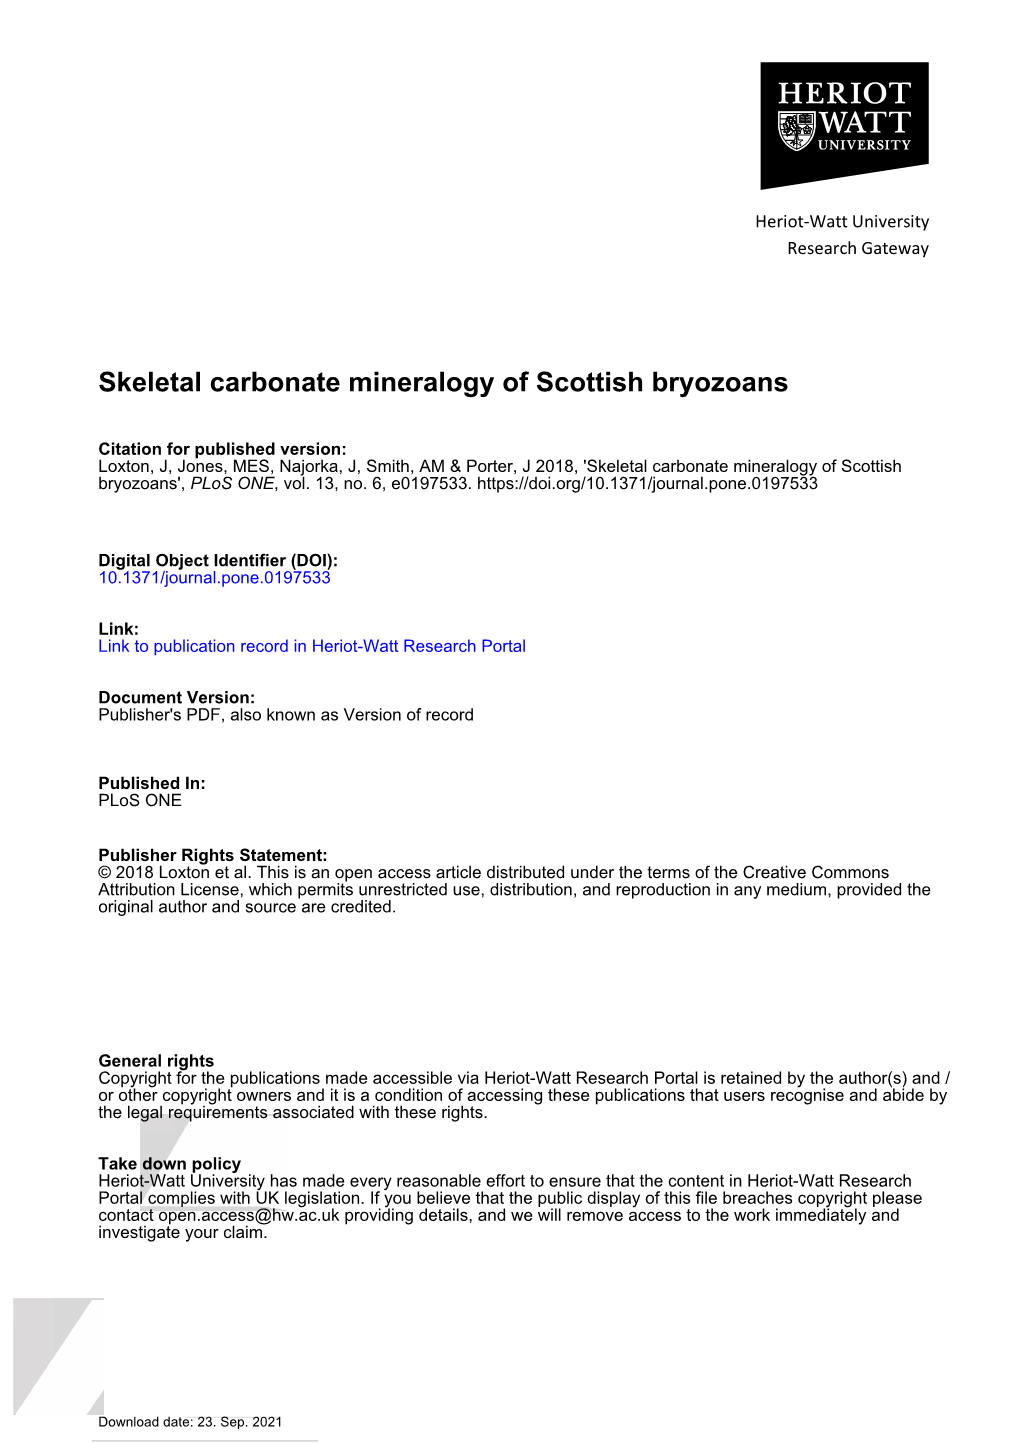 Skeletal Carbonate Mineralogy of Scottish Bryozoans